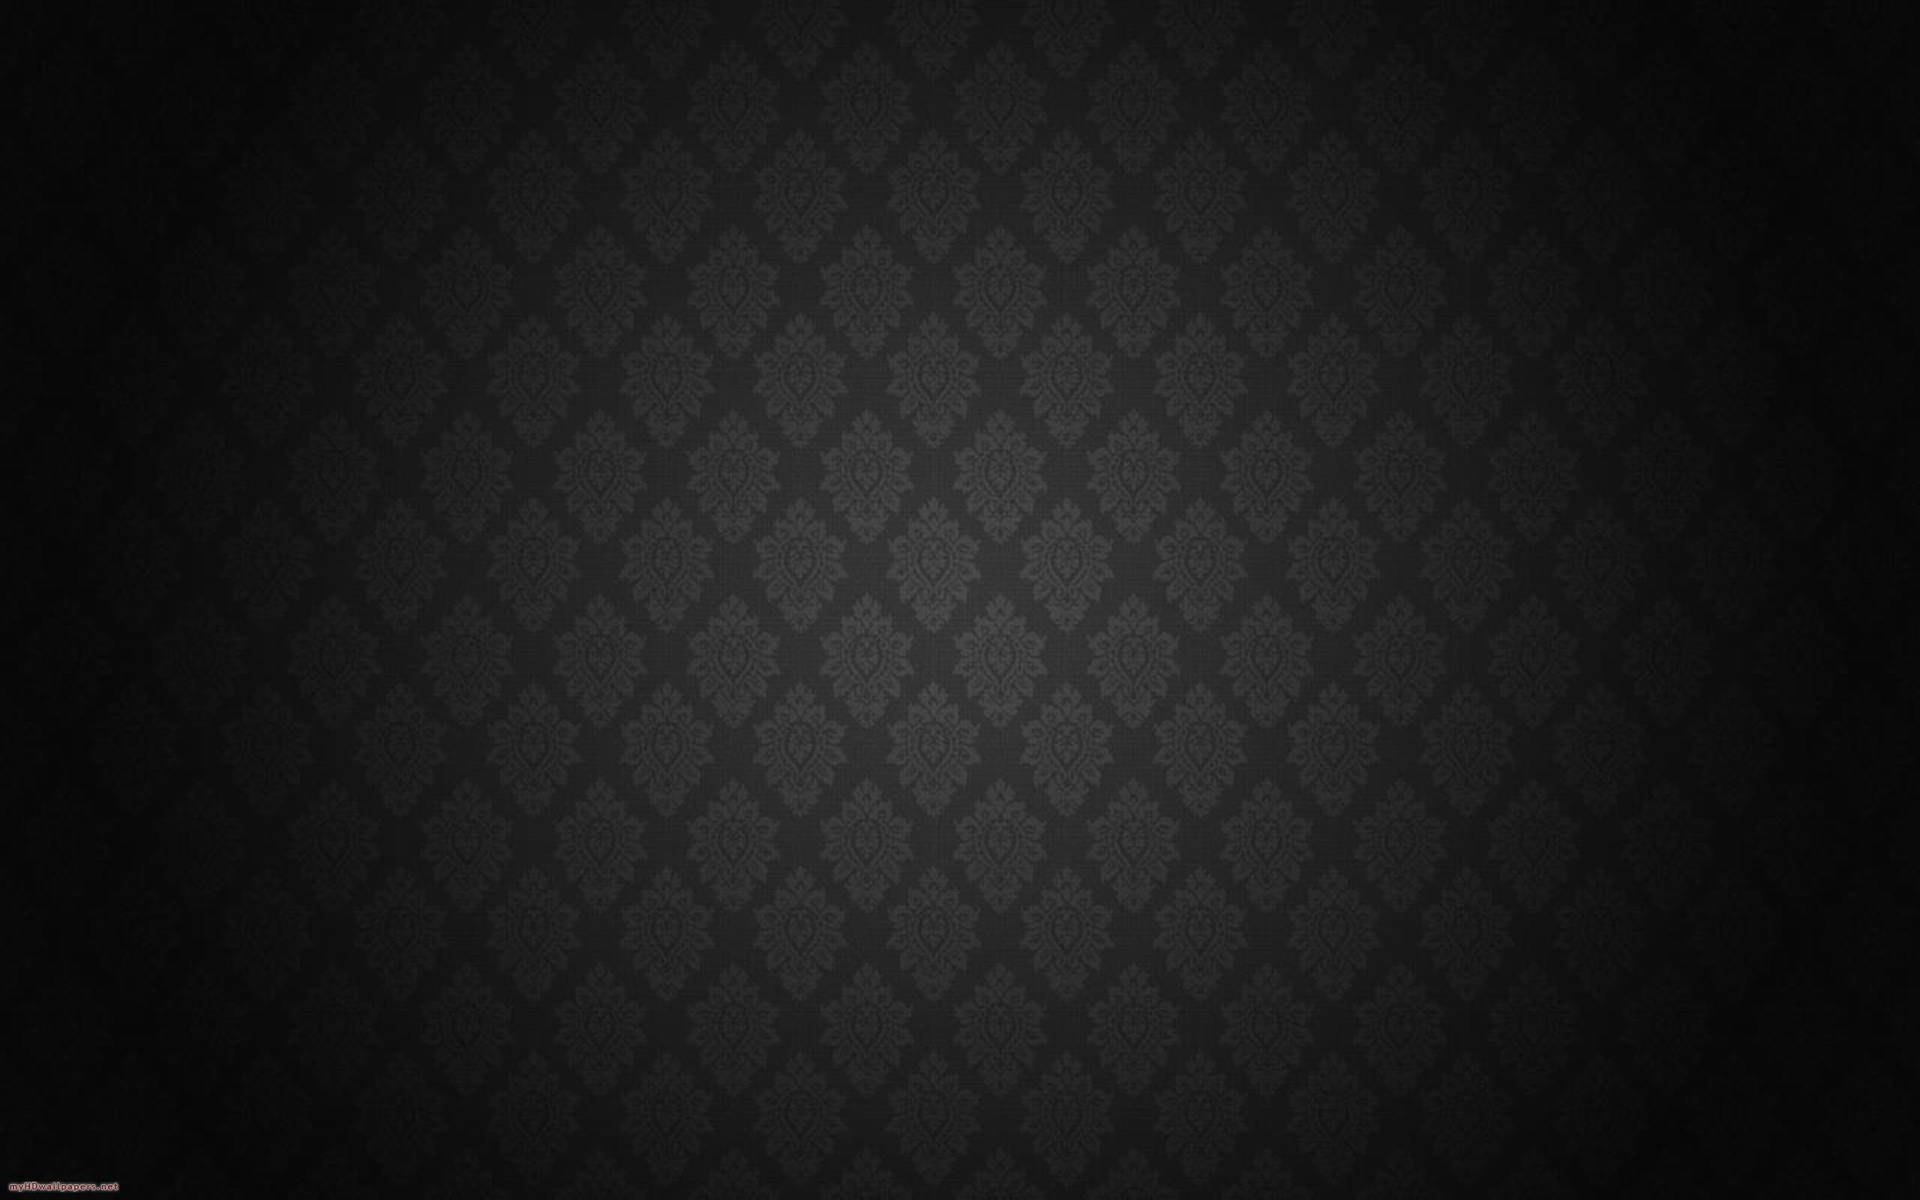 Plain Black With Grey Emblem Pattern Background